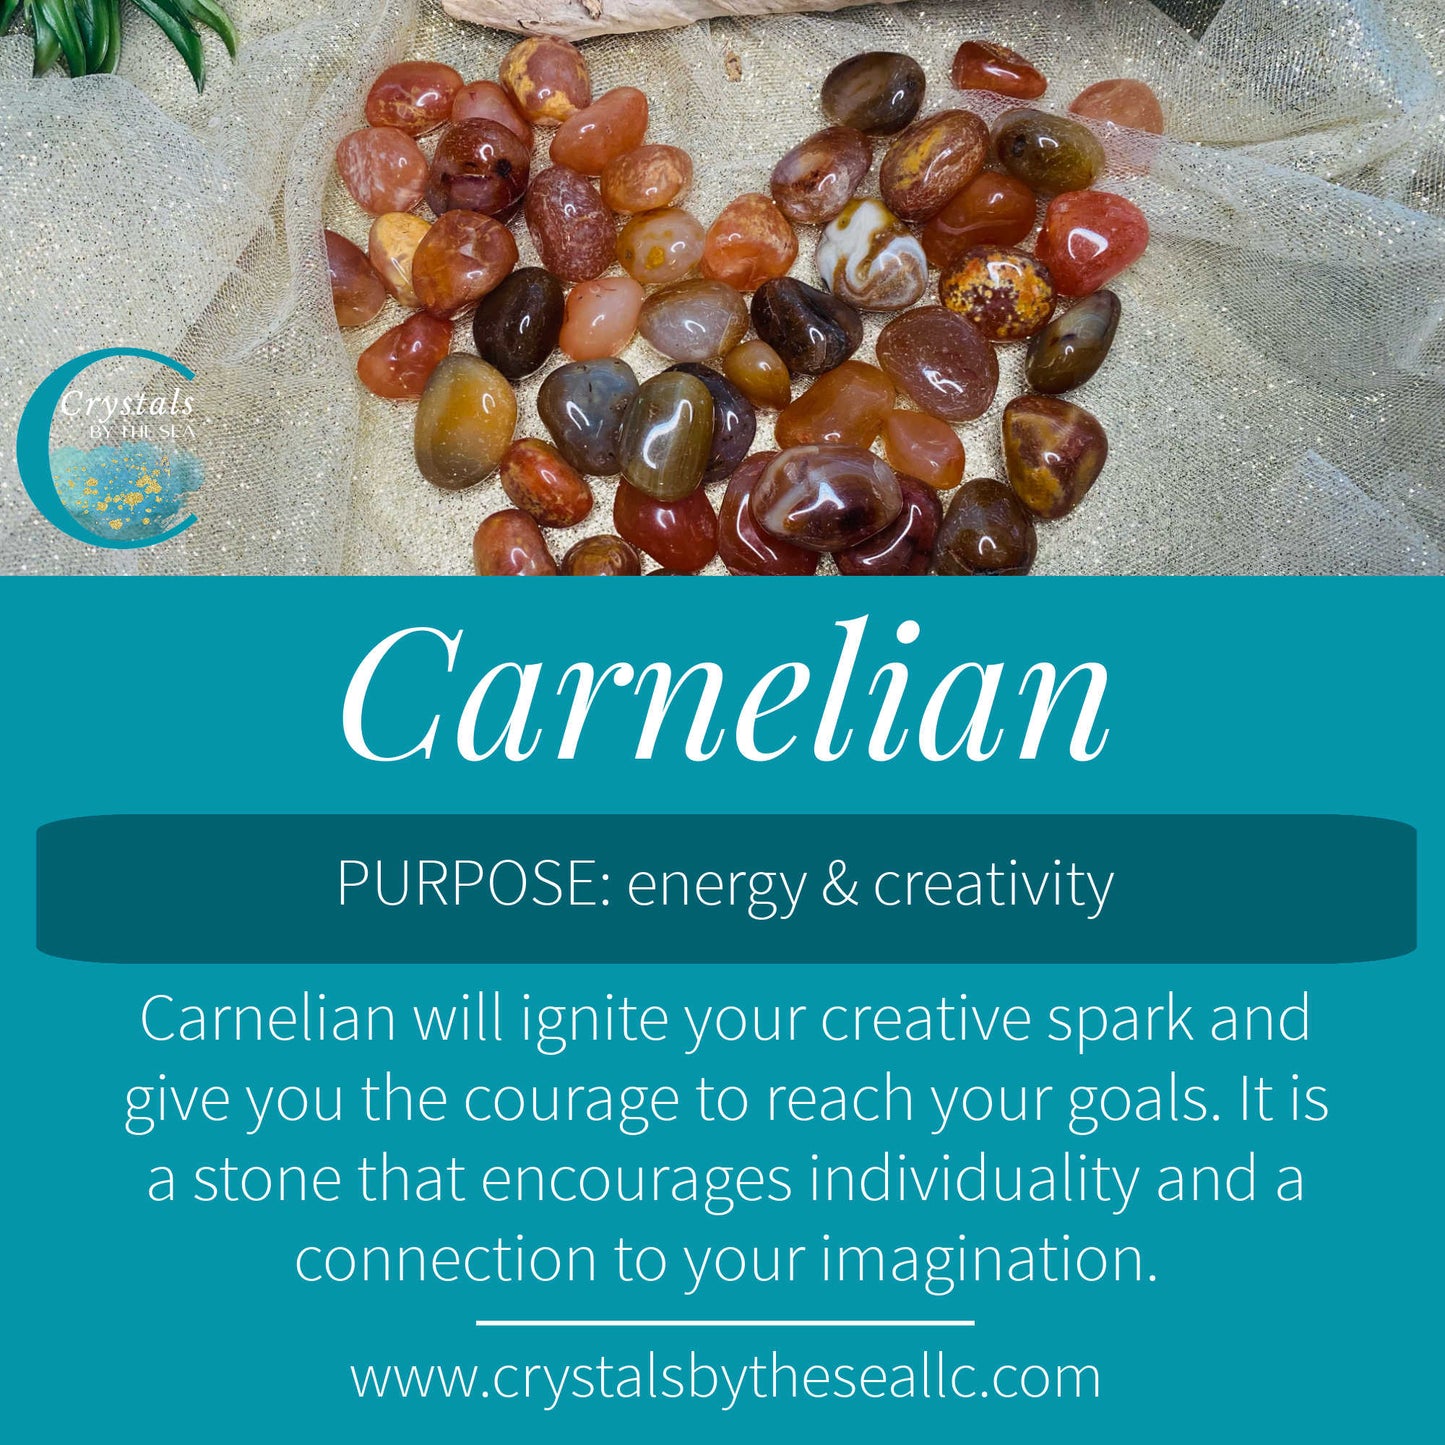 Carnelian Tumbled Crystal - Ignite Creativity and Courage